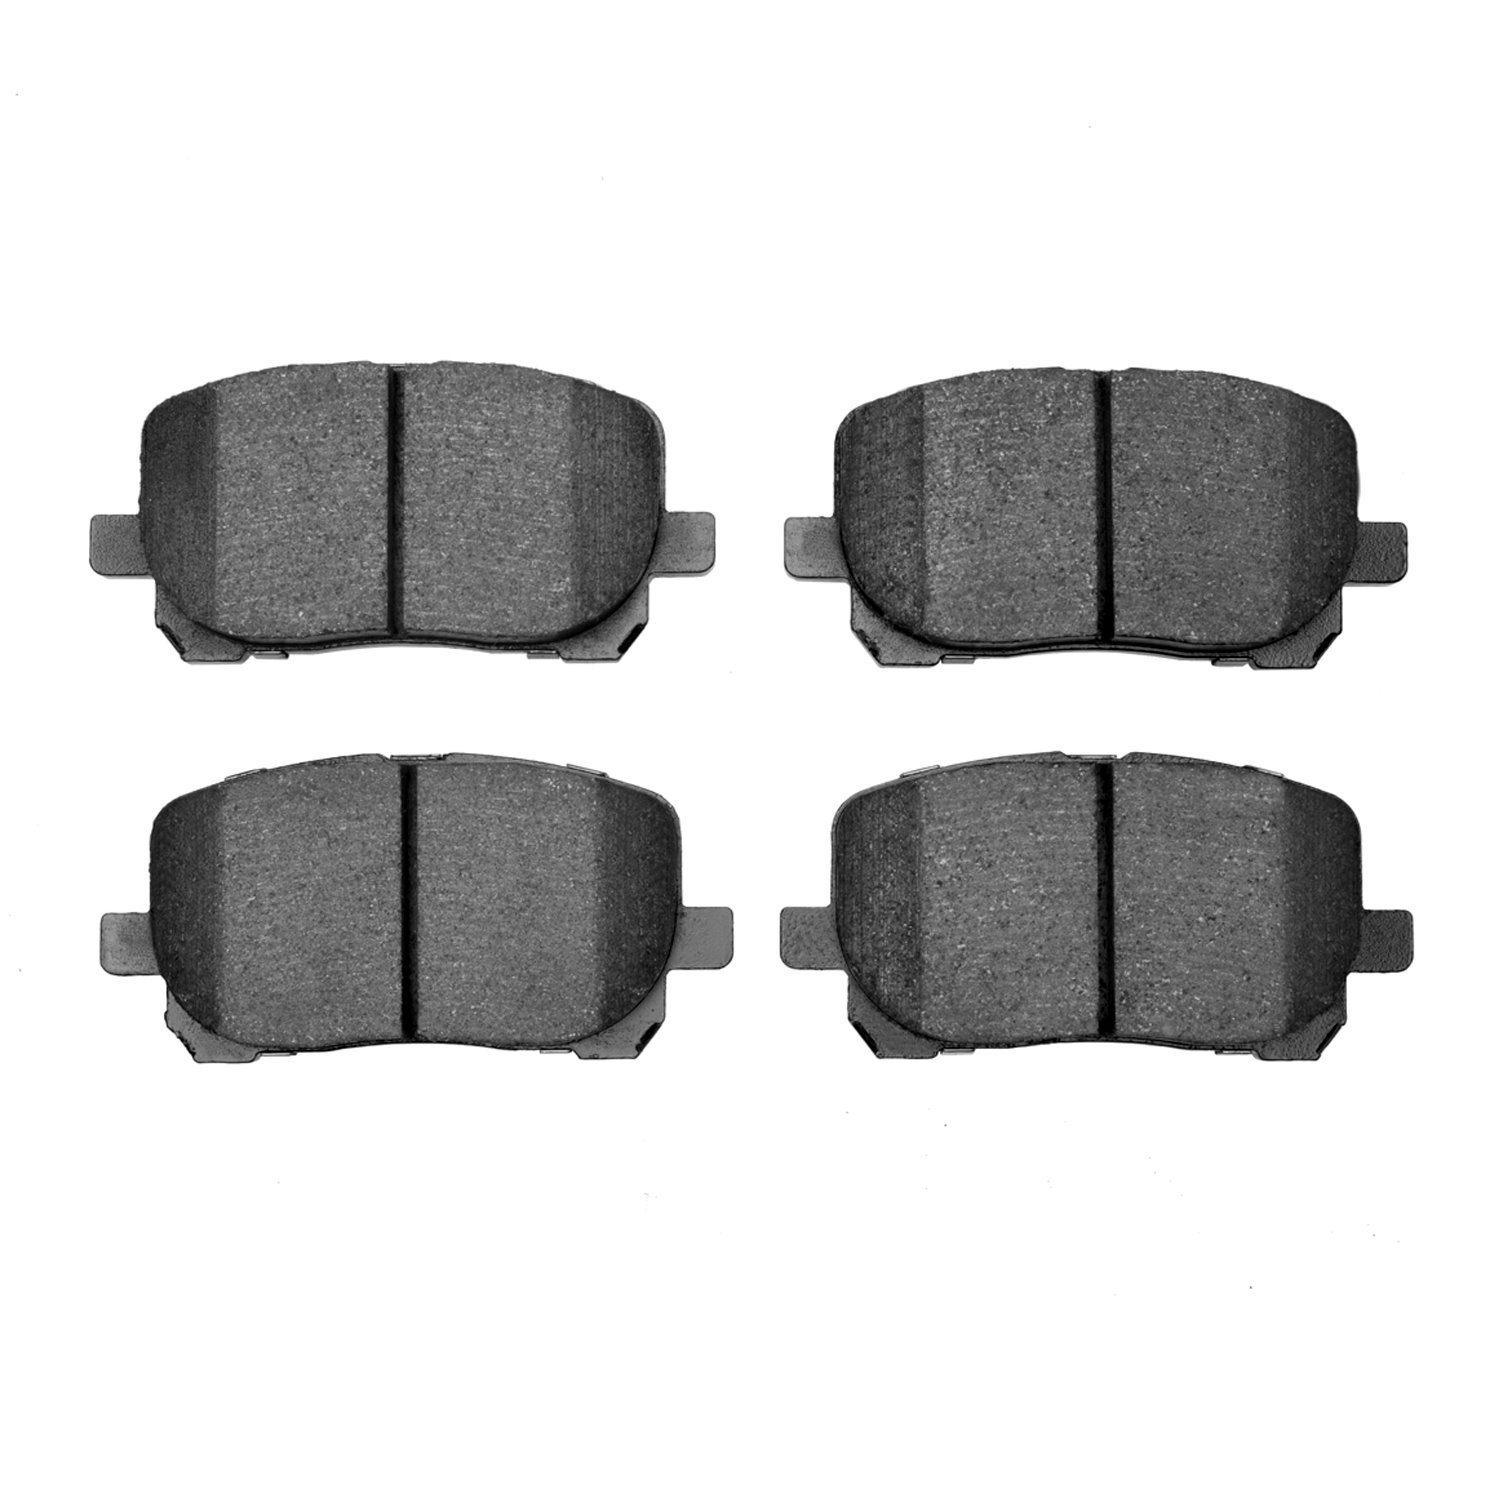 1310-0923-00 3000-Series Ceramic Brake Pads, 2003-2008 Multiple Makes/Models, Position: Front